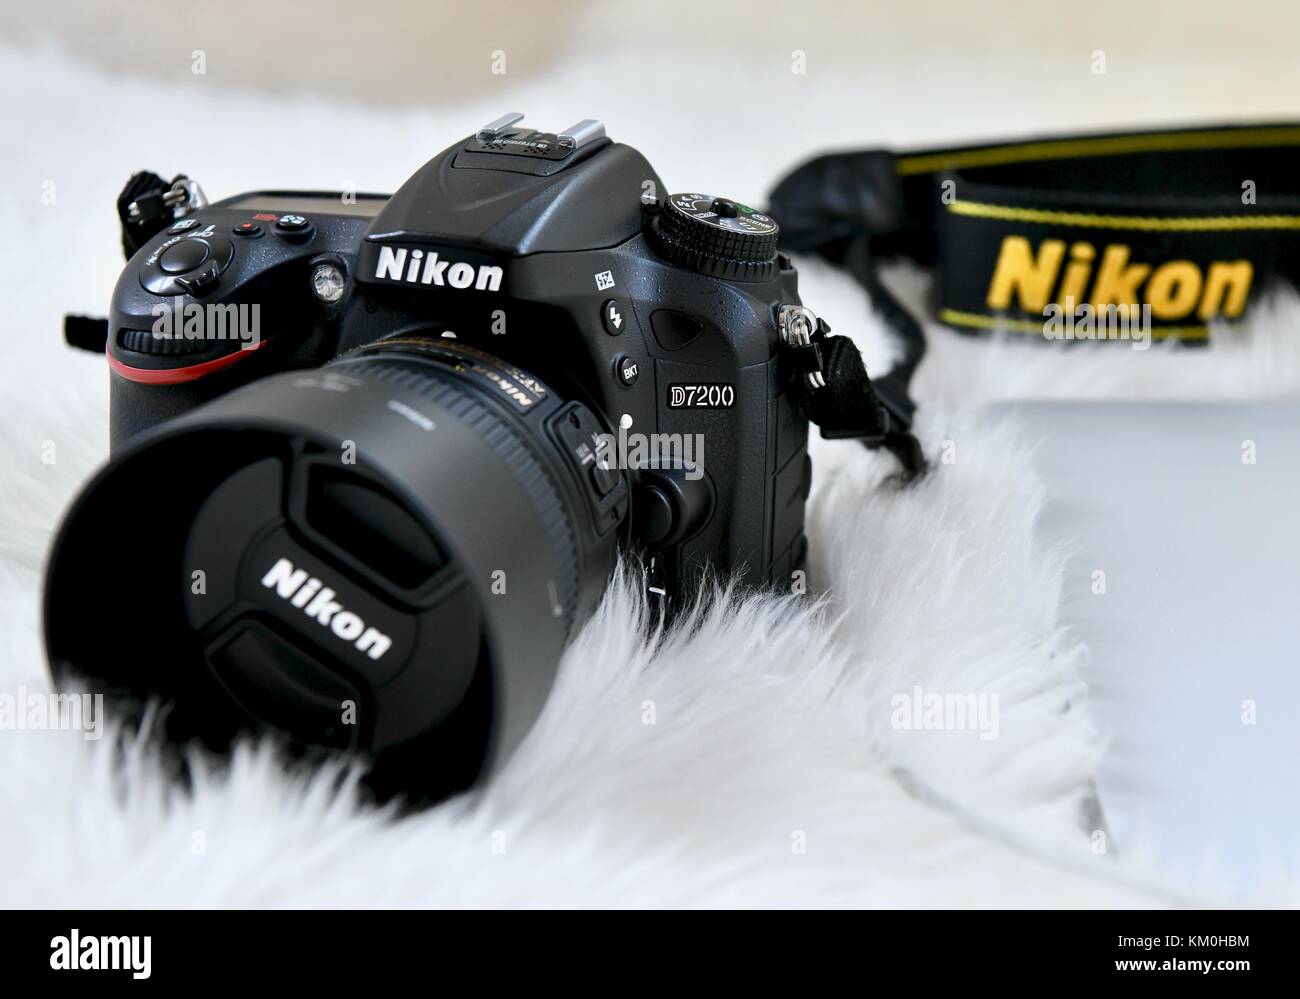 Nikon d7200 hi-res stock photography and images - Alamy